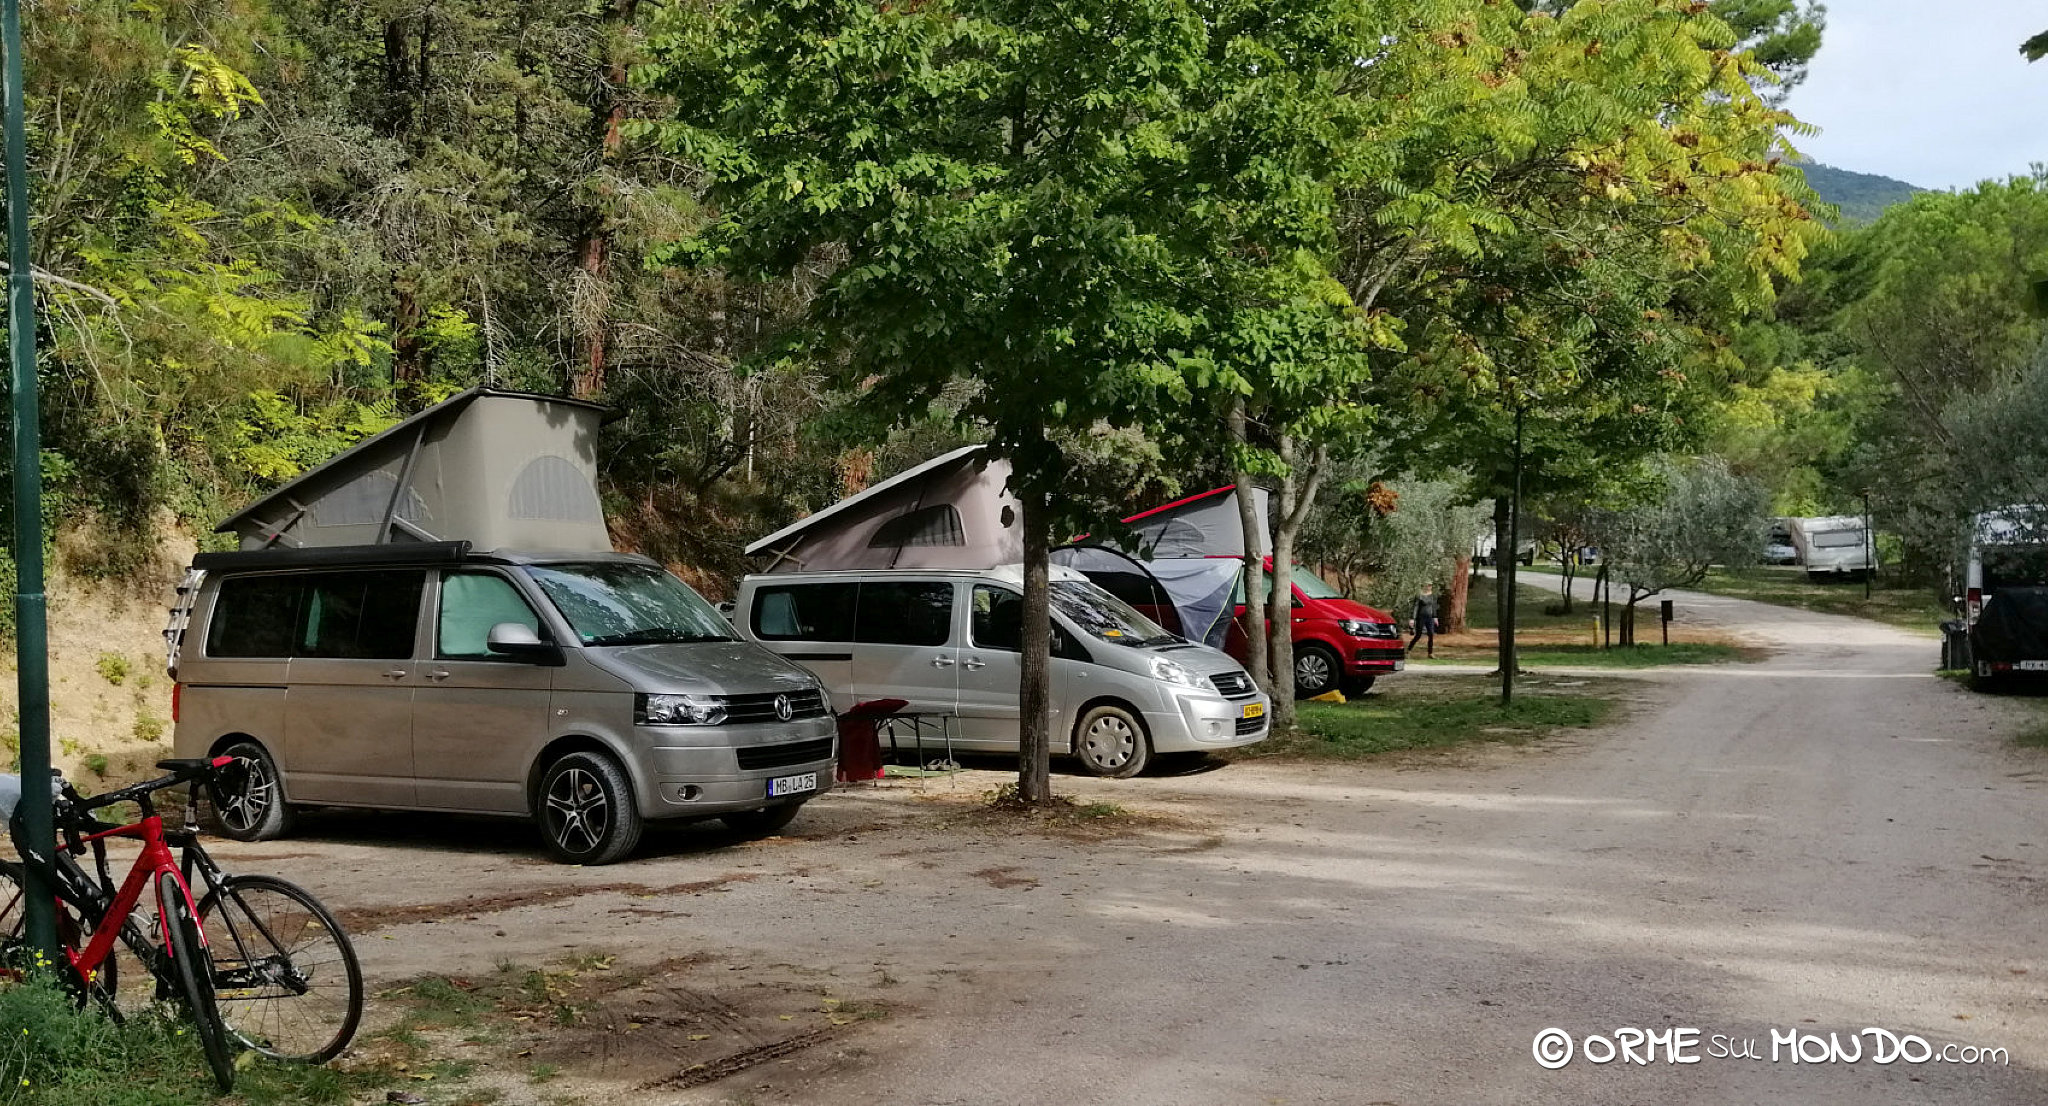 Piazzole per furgoni e camper nel verde del Parco